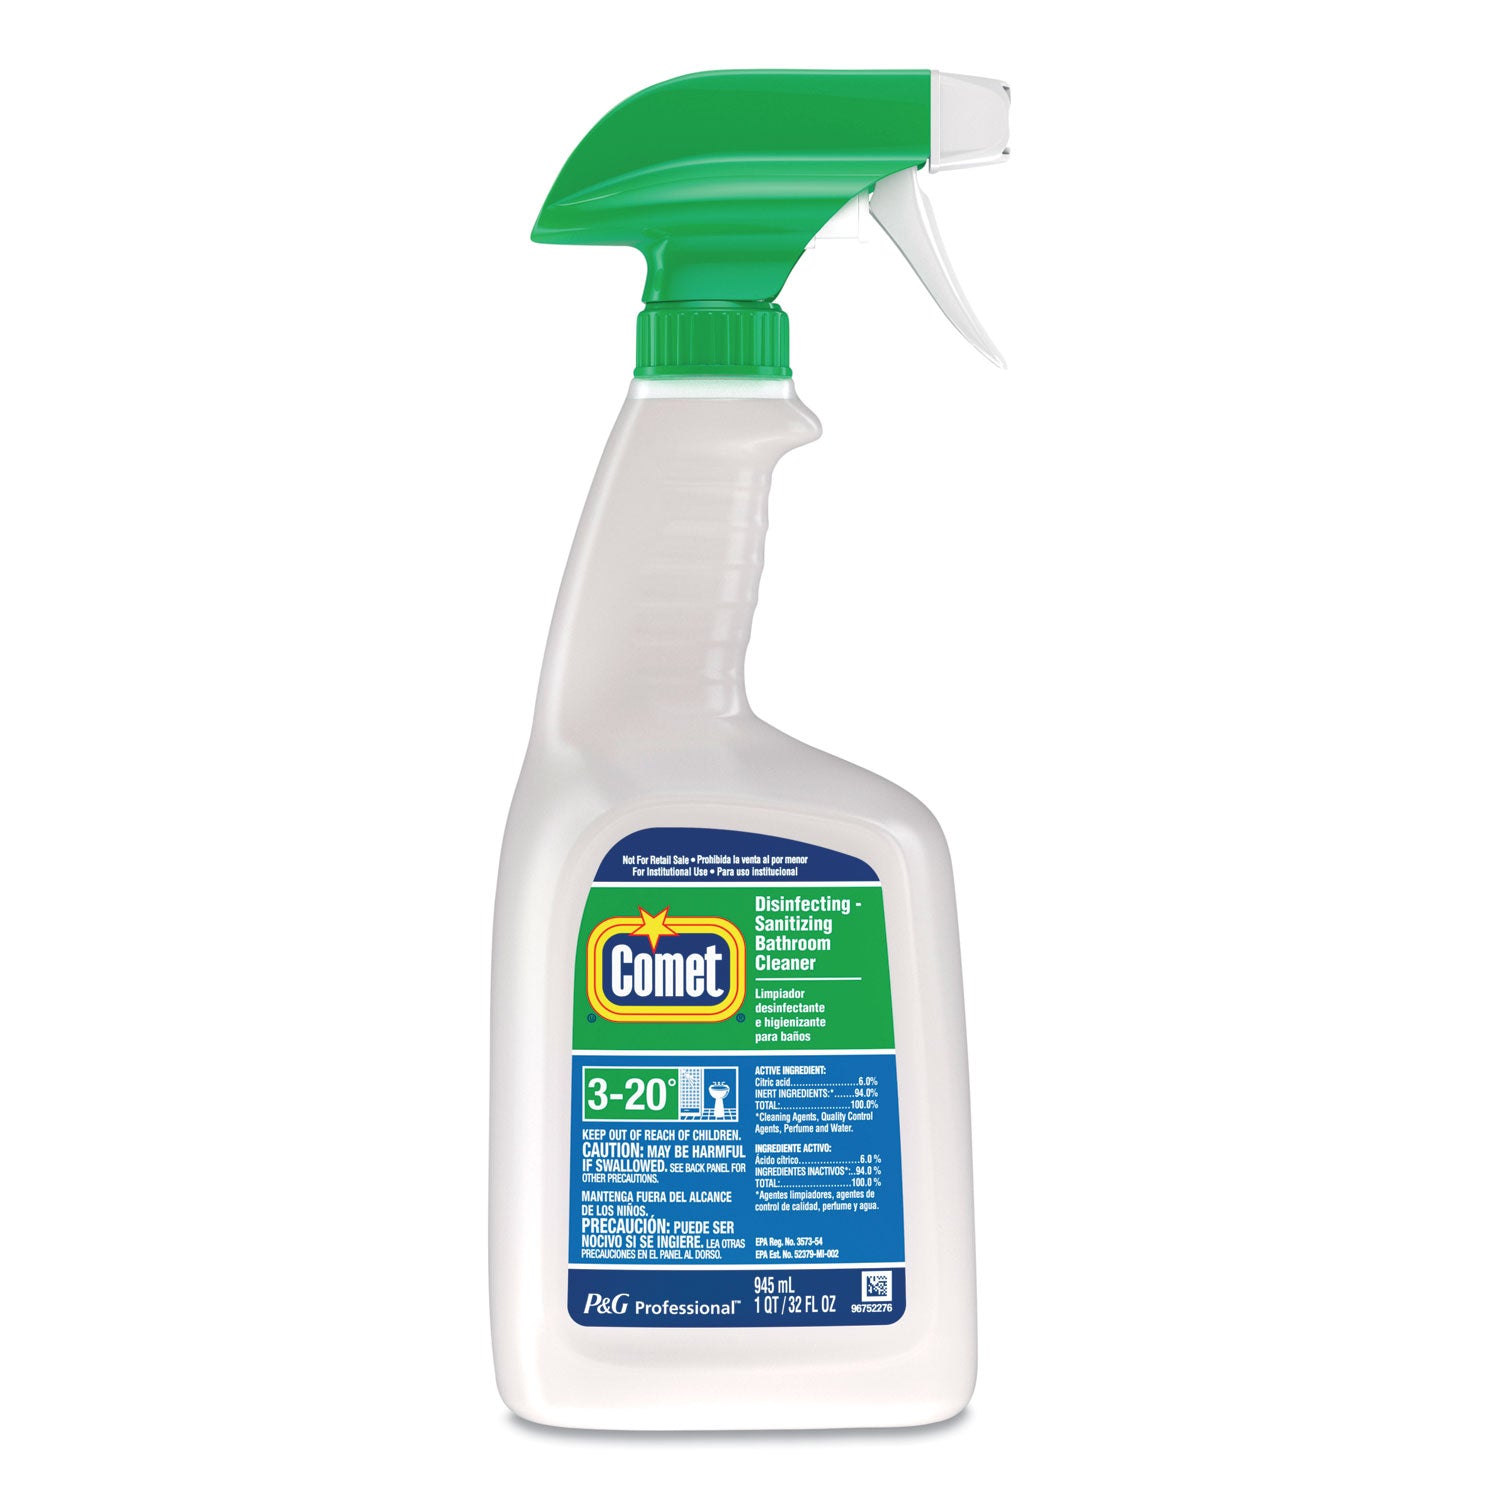 disinfecting-sanitizing-bathroom-cleaner-32-oz-trigger-spray-bottle-6-carton_pgc19214 - 2